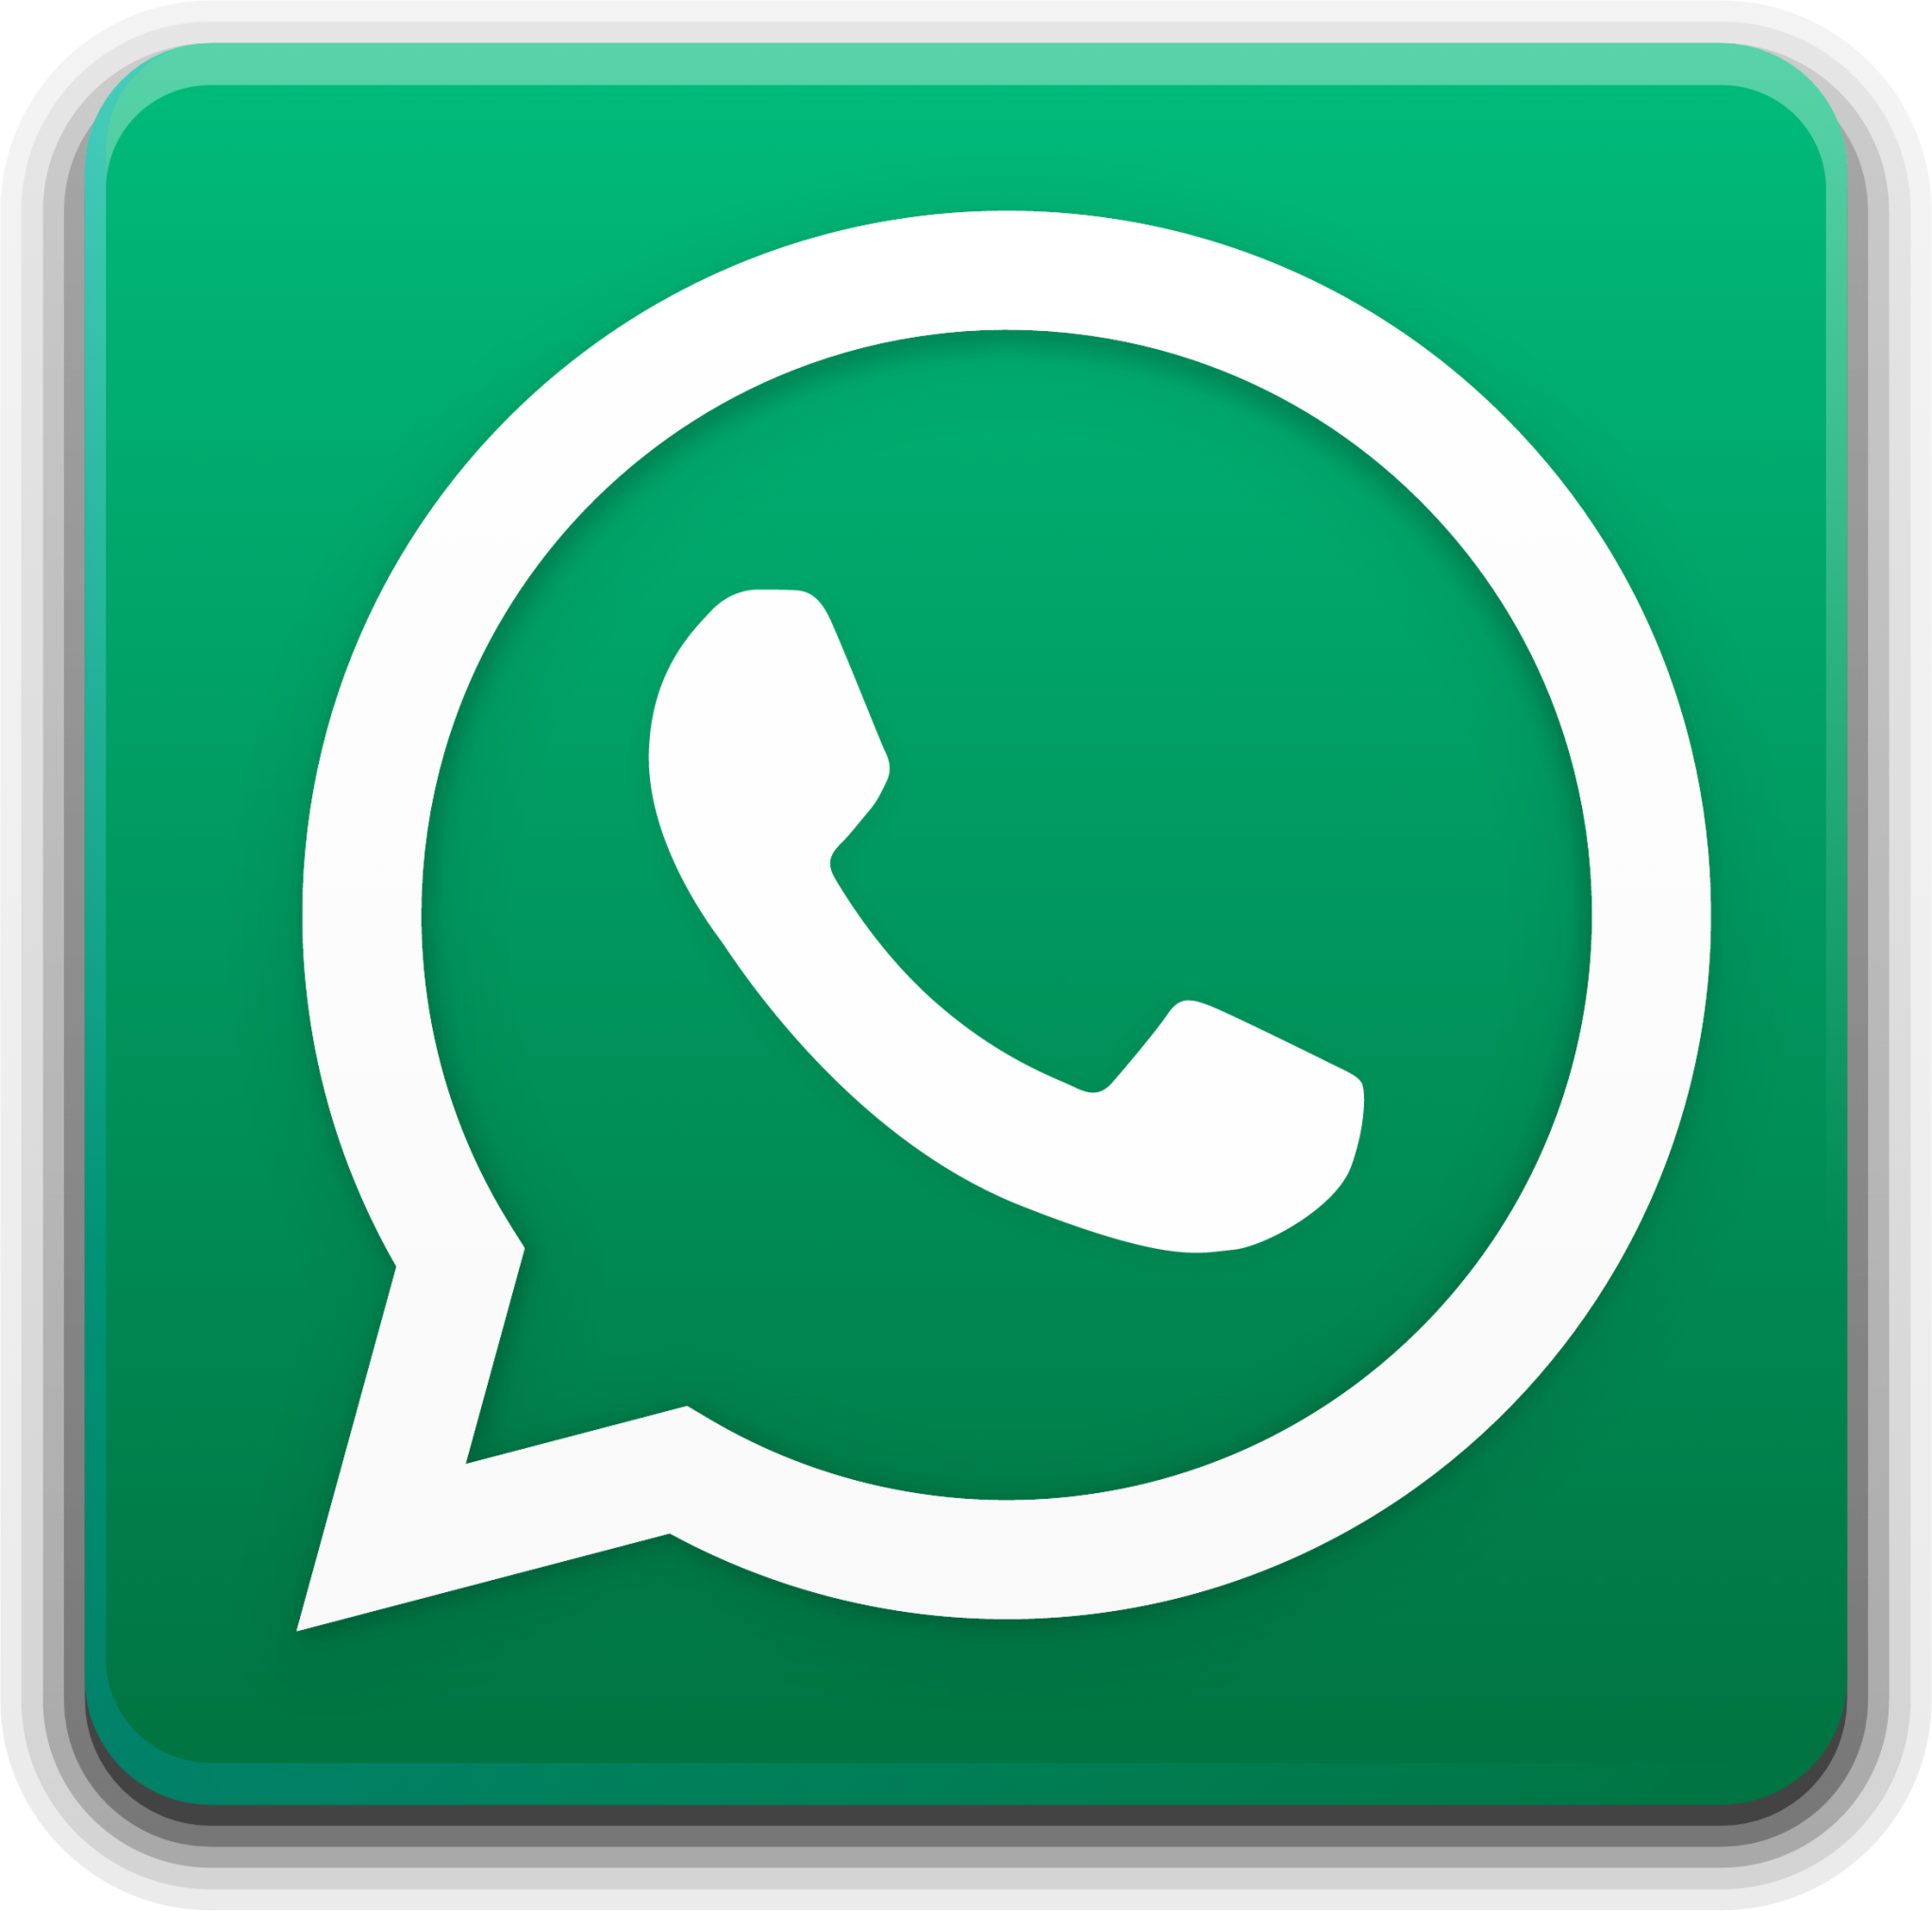 whatsapp icon